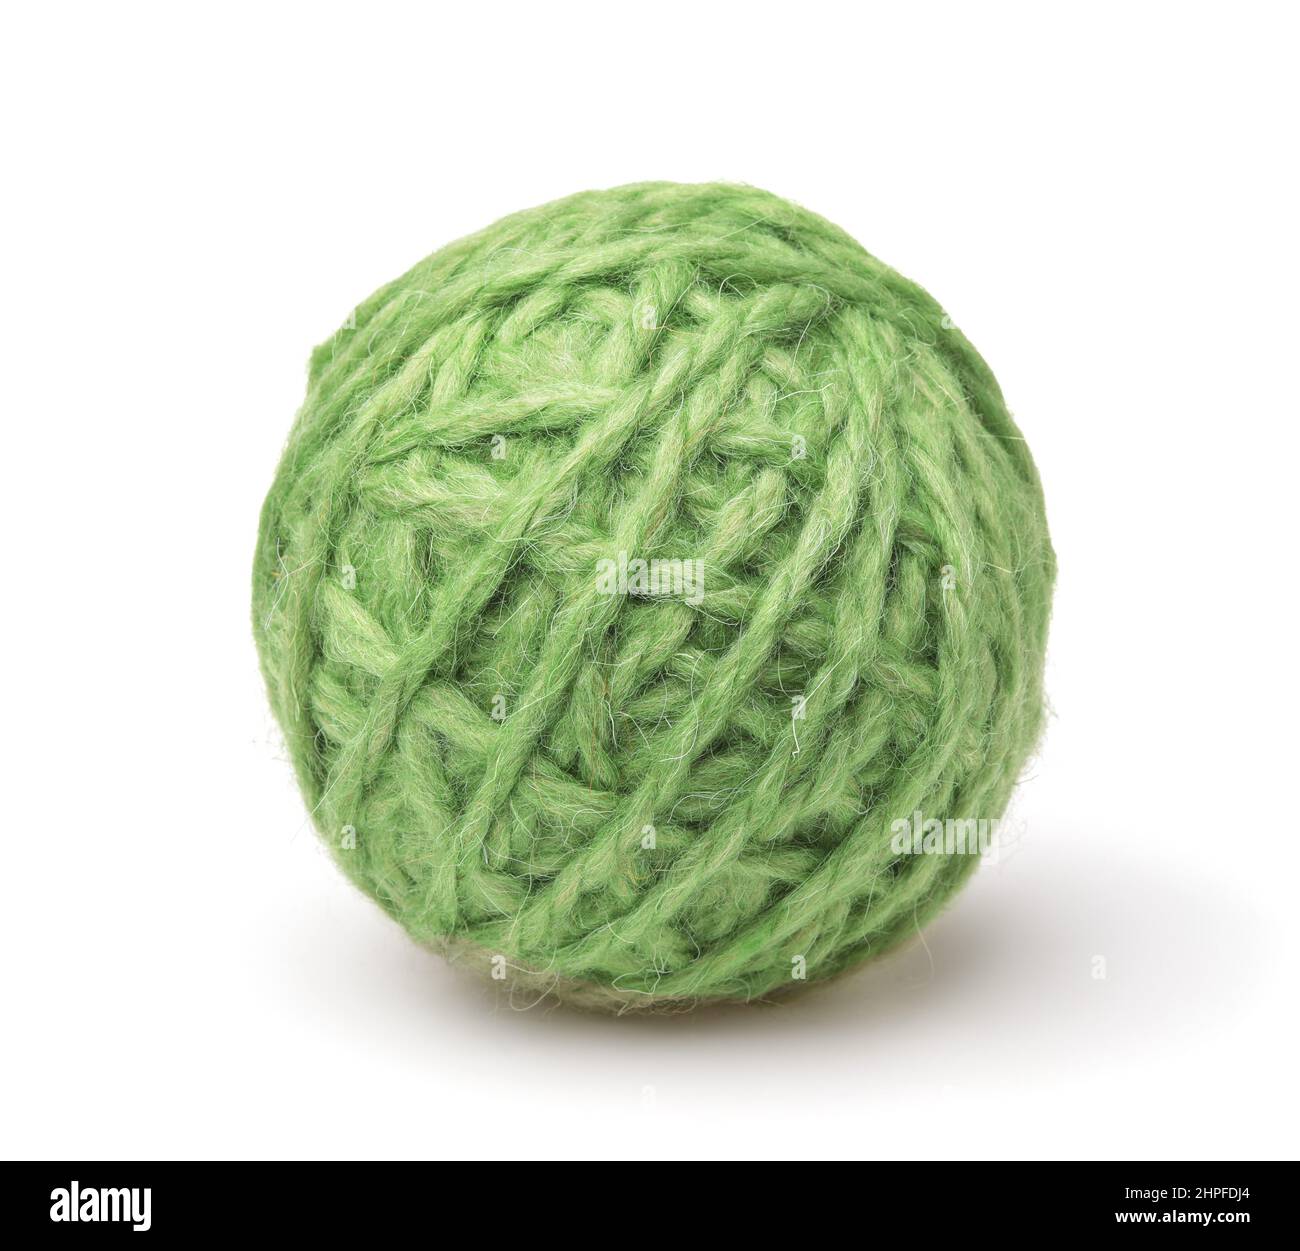 Ball of Yarn Green